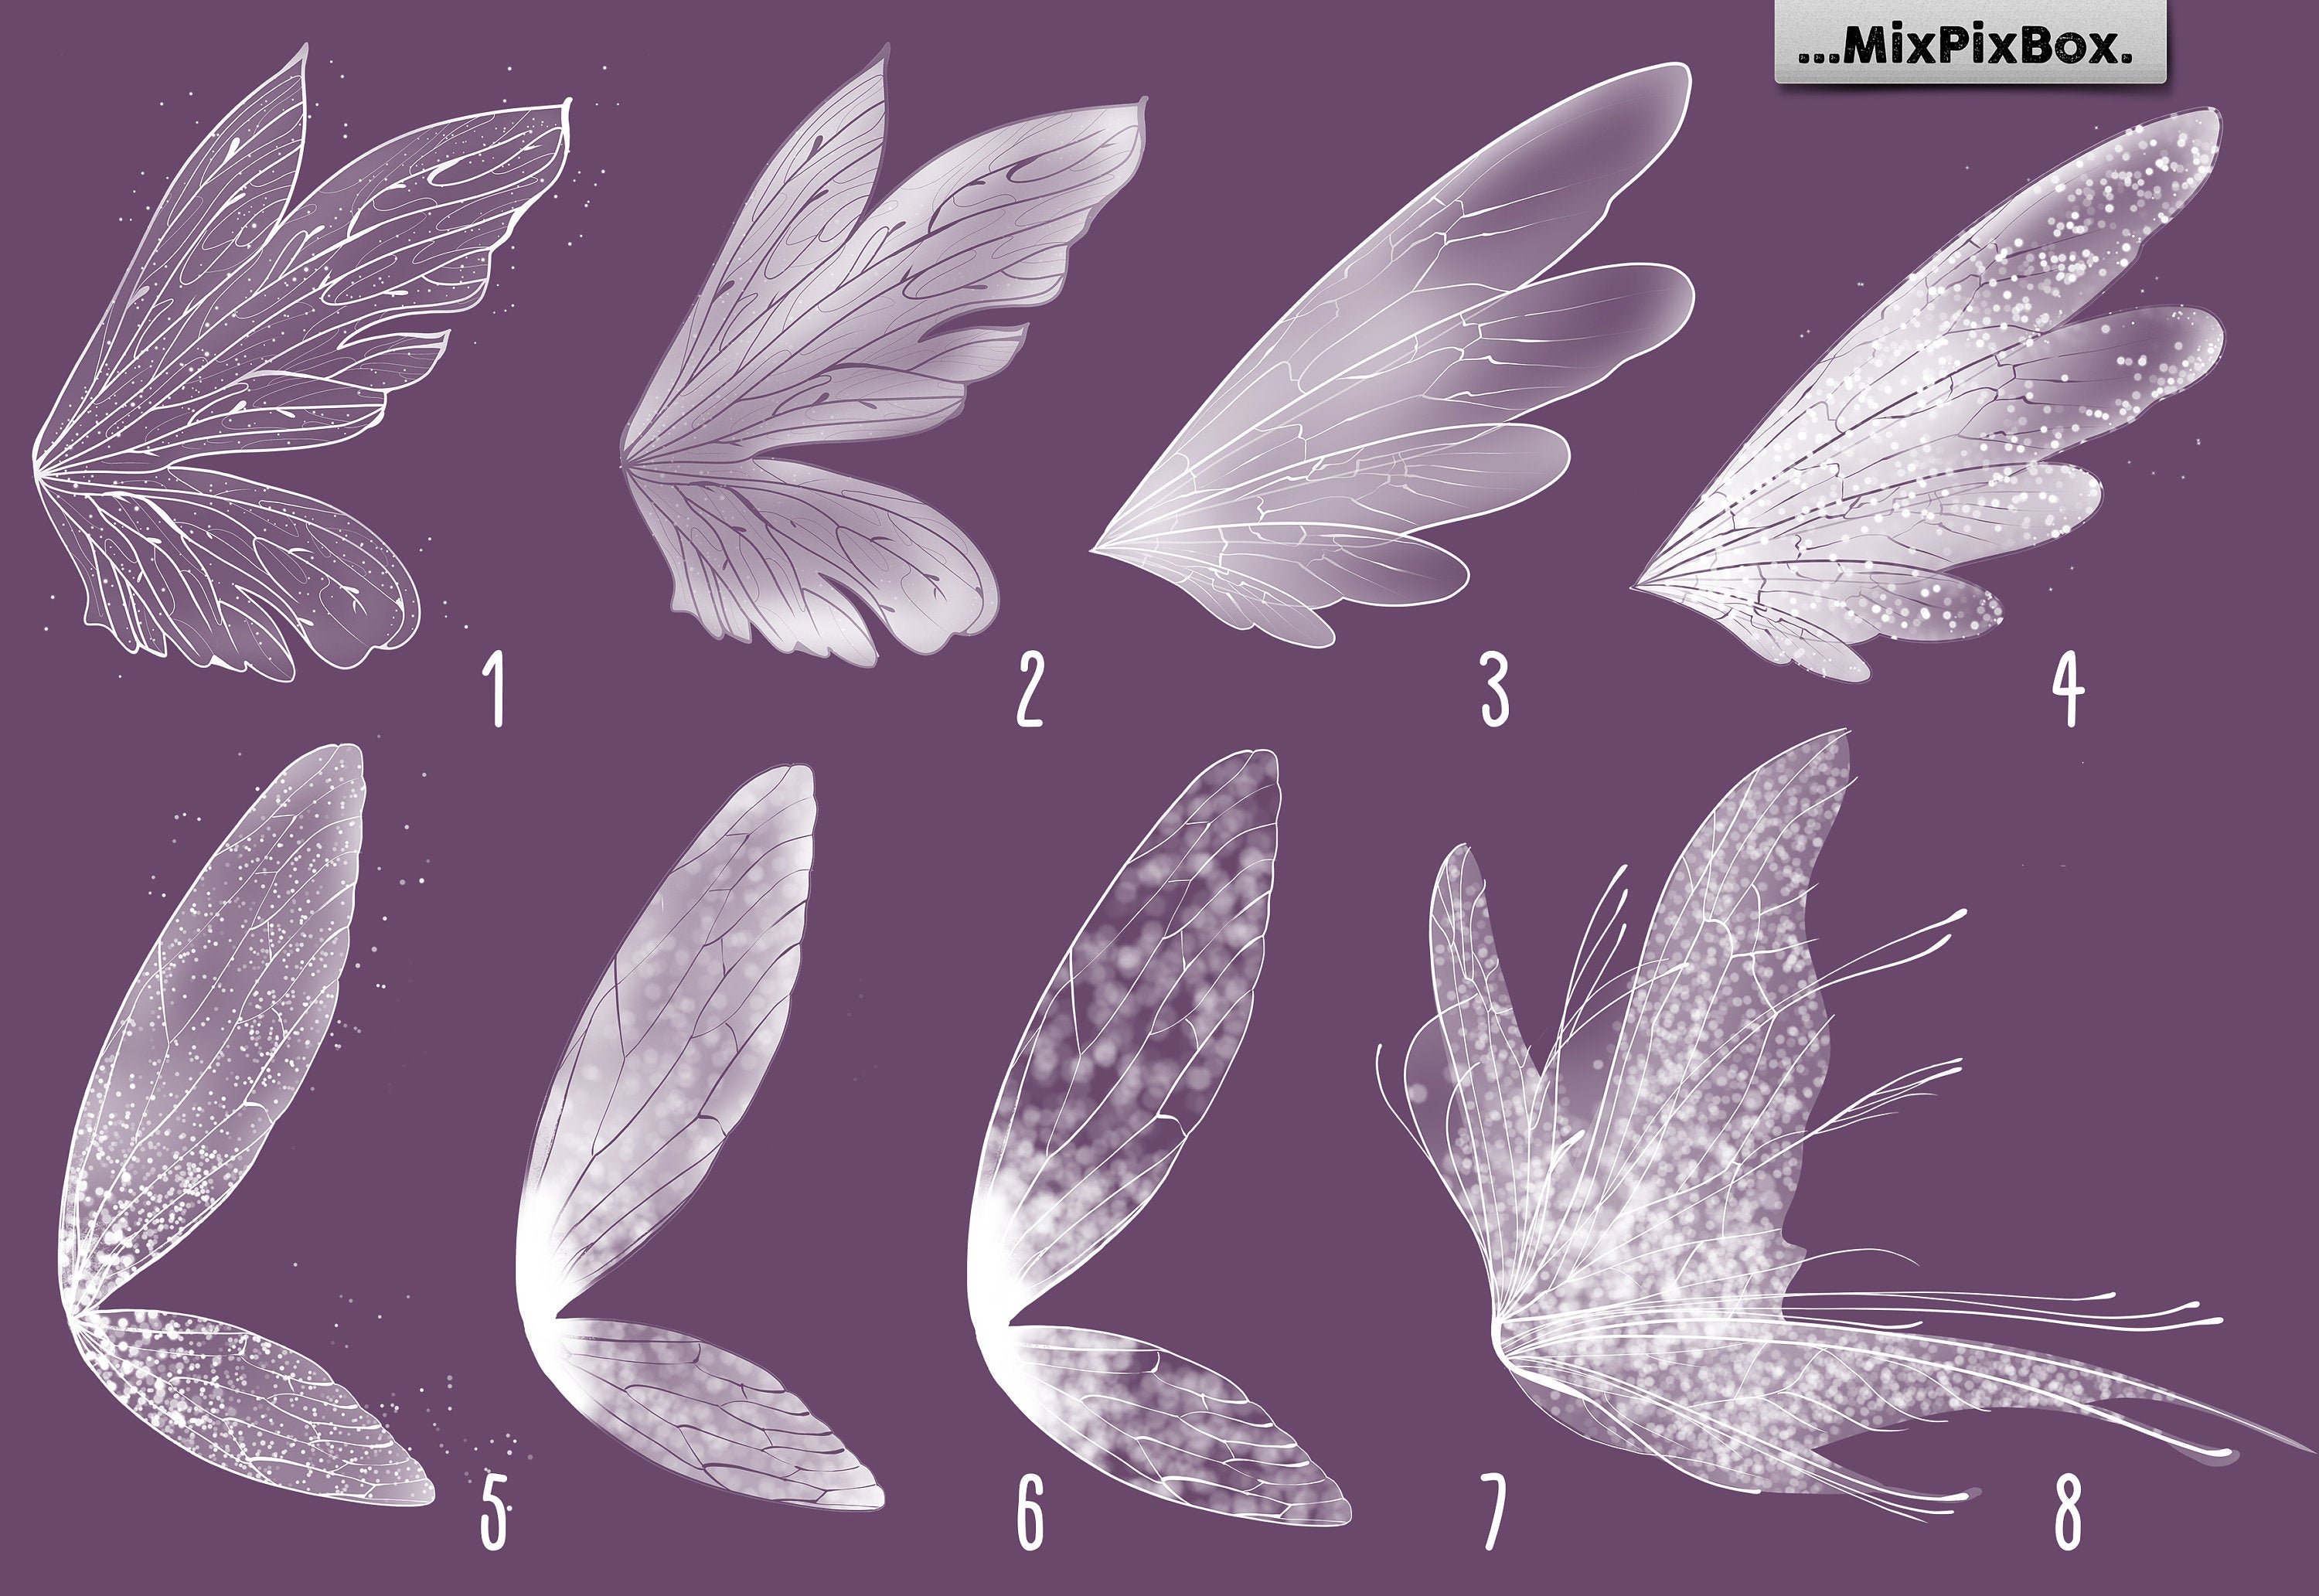 fairy wings drawing